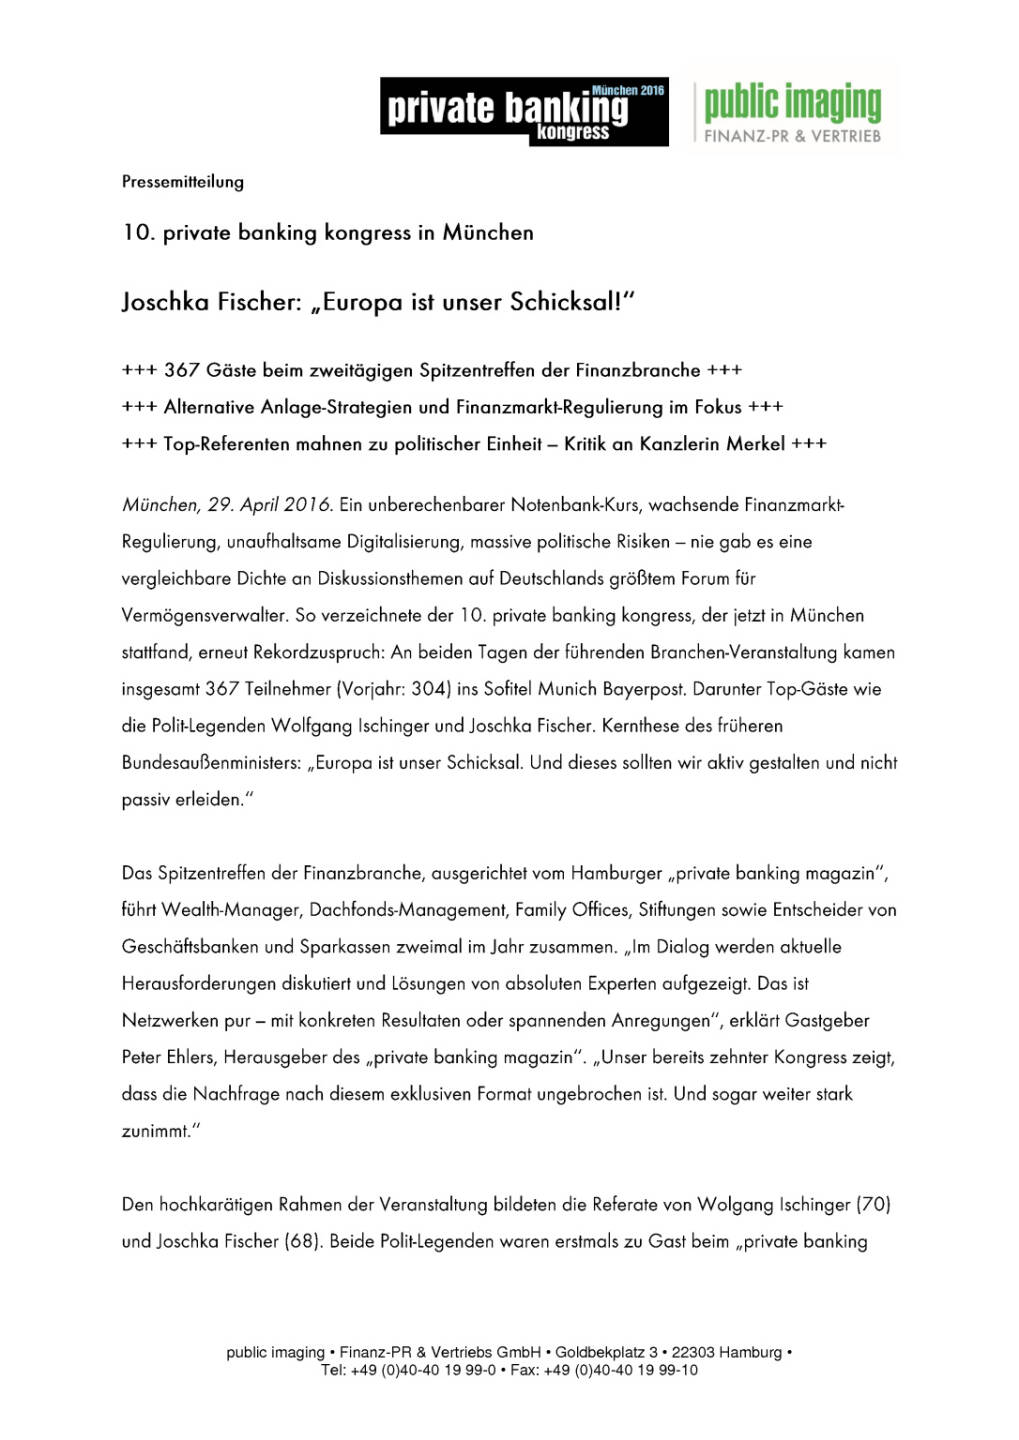 10. private banking kongress in München, Seite 1/4, komplettes Dokument unter http://boerse-social.com/static/uploads/file_979_10_private_banking_kongress_in_munchen.pdf